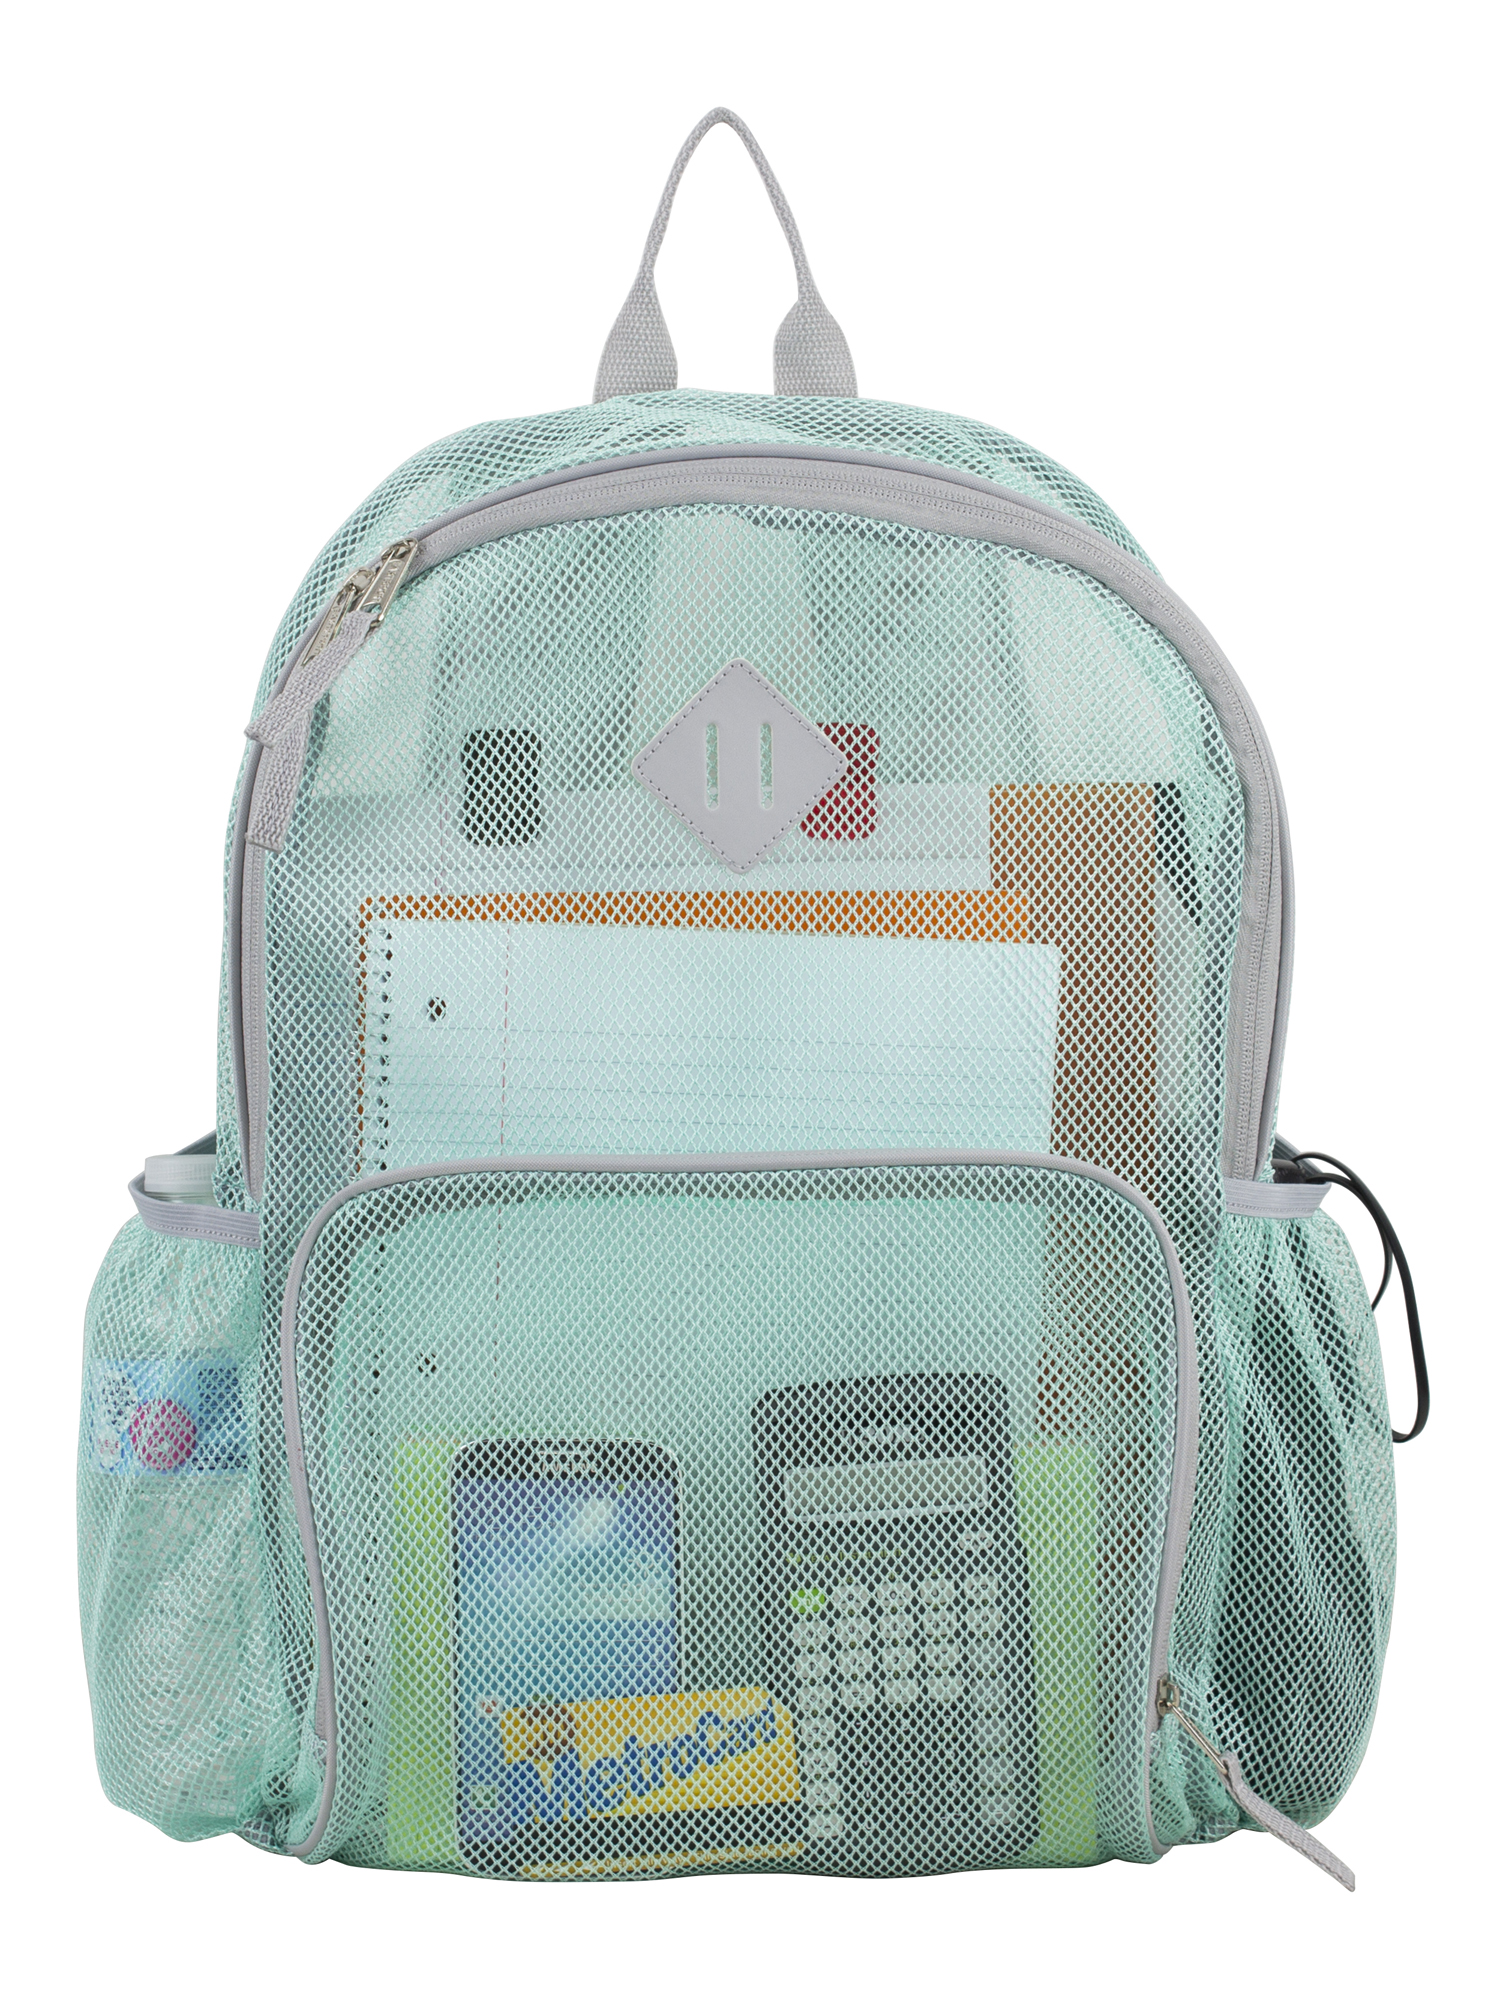 Eastsport Unisex Multi-Purpose Mesh Backpack with Front Pocket Mint - image 2 of 6